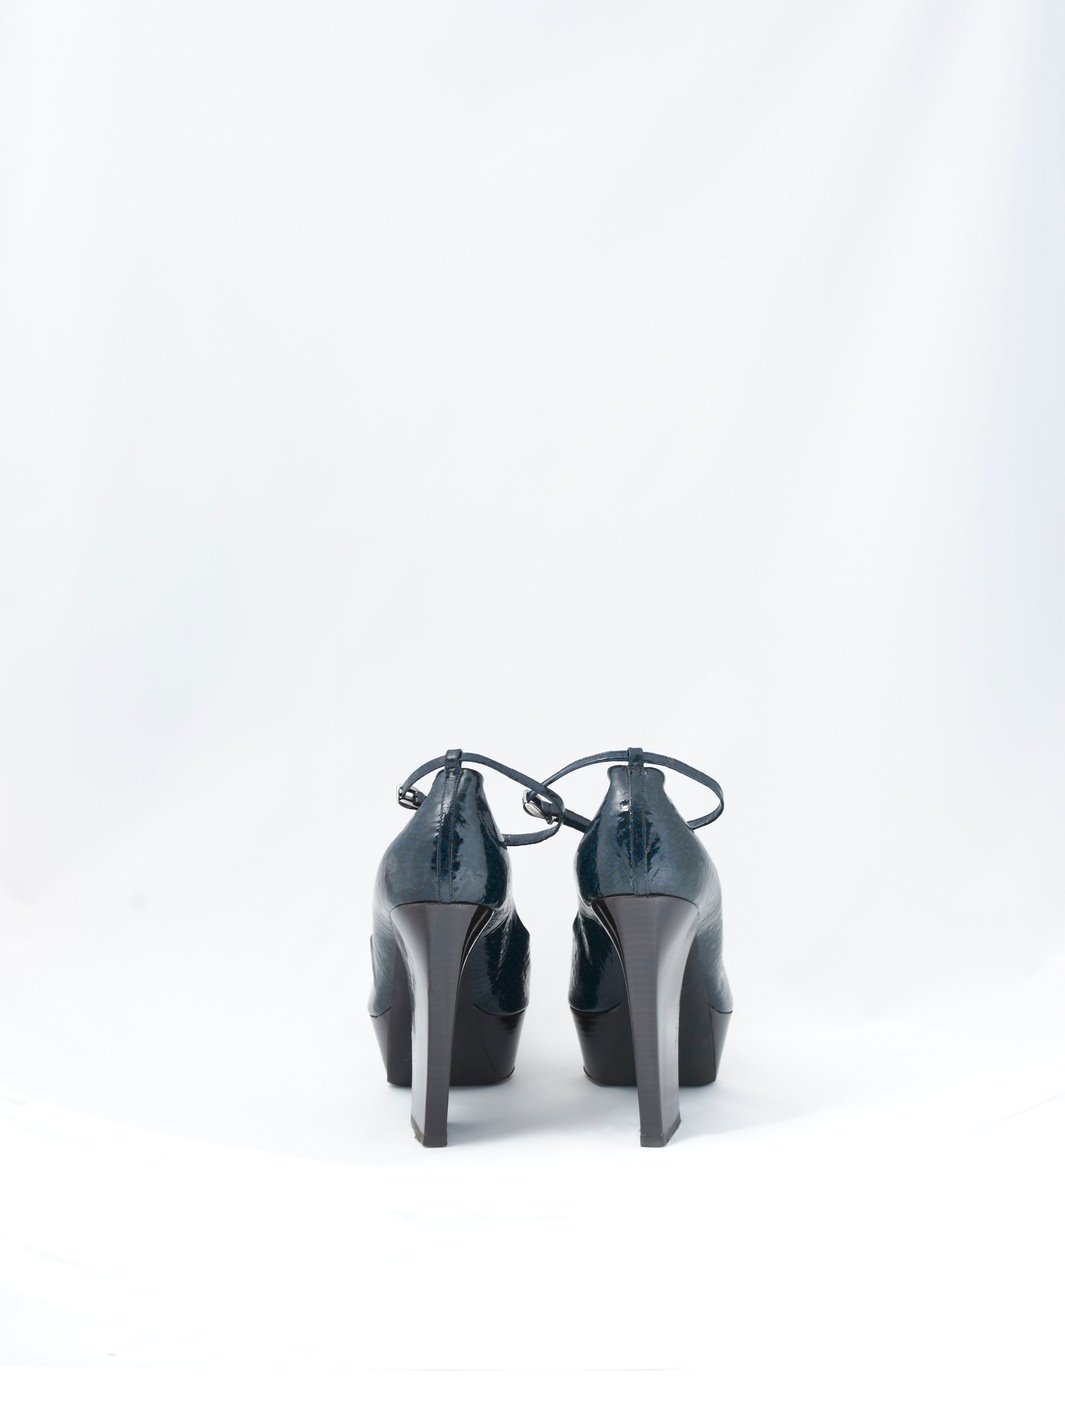 Jil Sander blue patent leather pumps with ankle strap